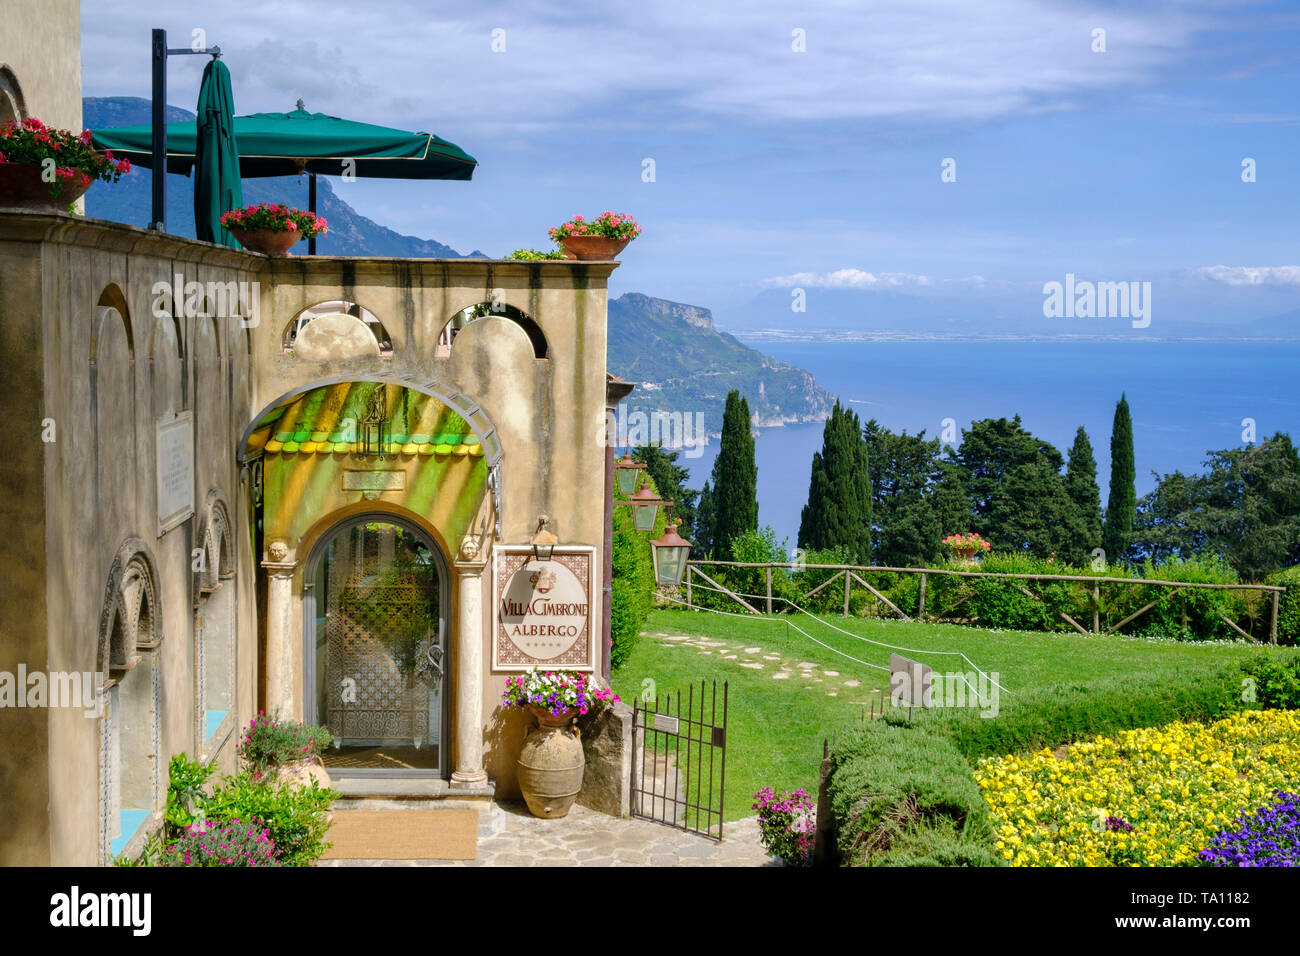 Villa Cimbrone Hotel (Albergo) in Ravello overlooking the Amalfi Coast and Bay of Salerno in Campania Southern Italy Stock Photo